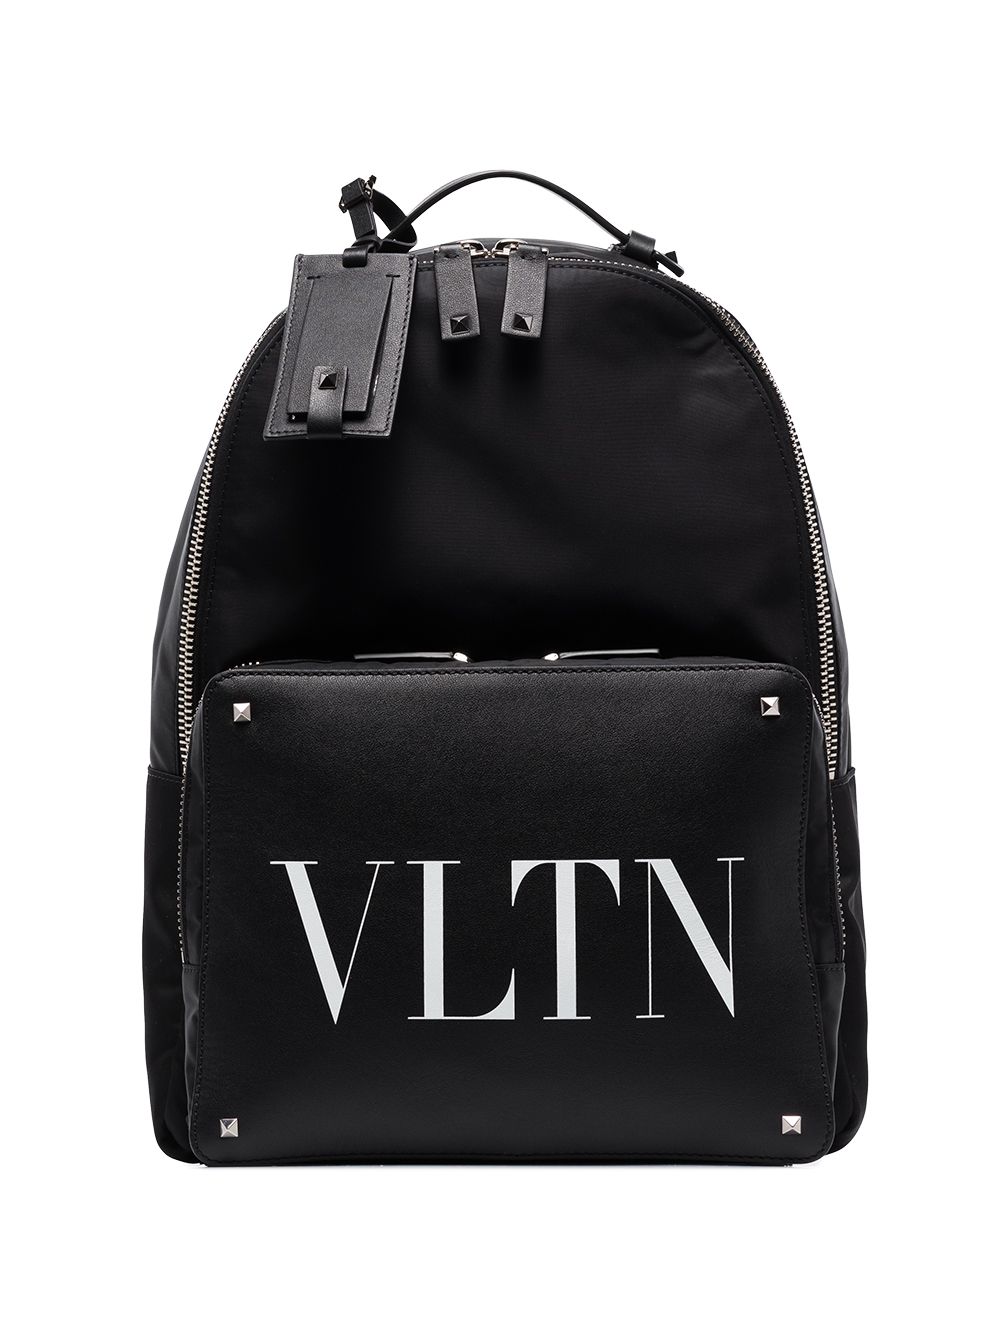 фото Valentino garavani рюкзак с логотипом vltn и декором rockstud